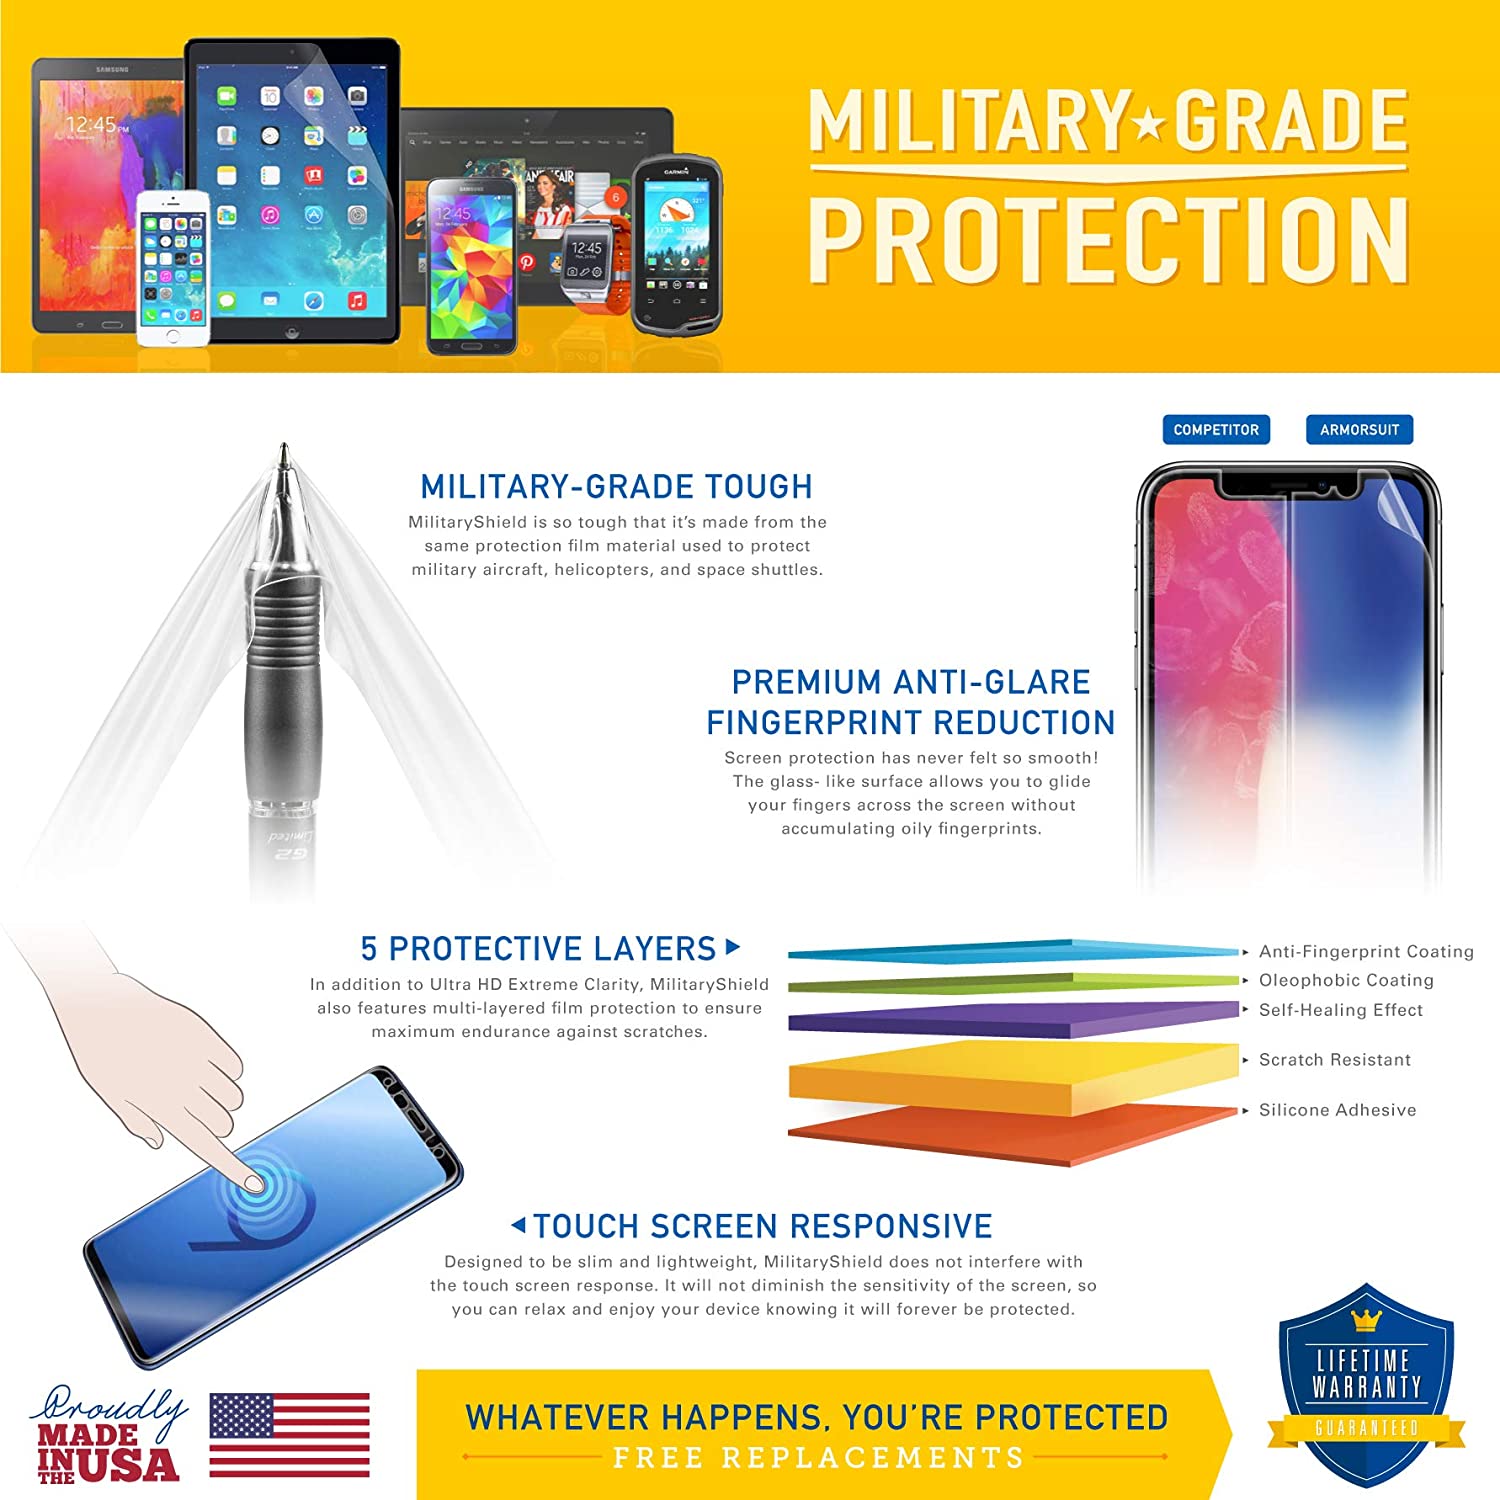 Sony SmartWatch Full Body Skin Protector